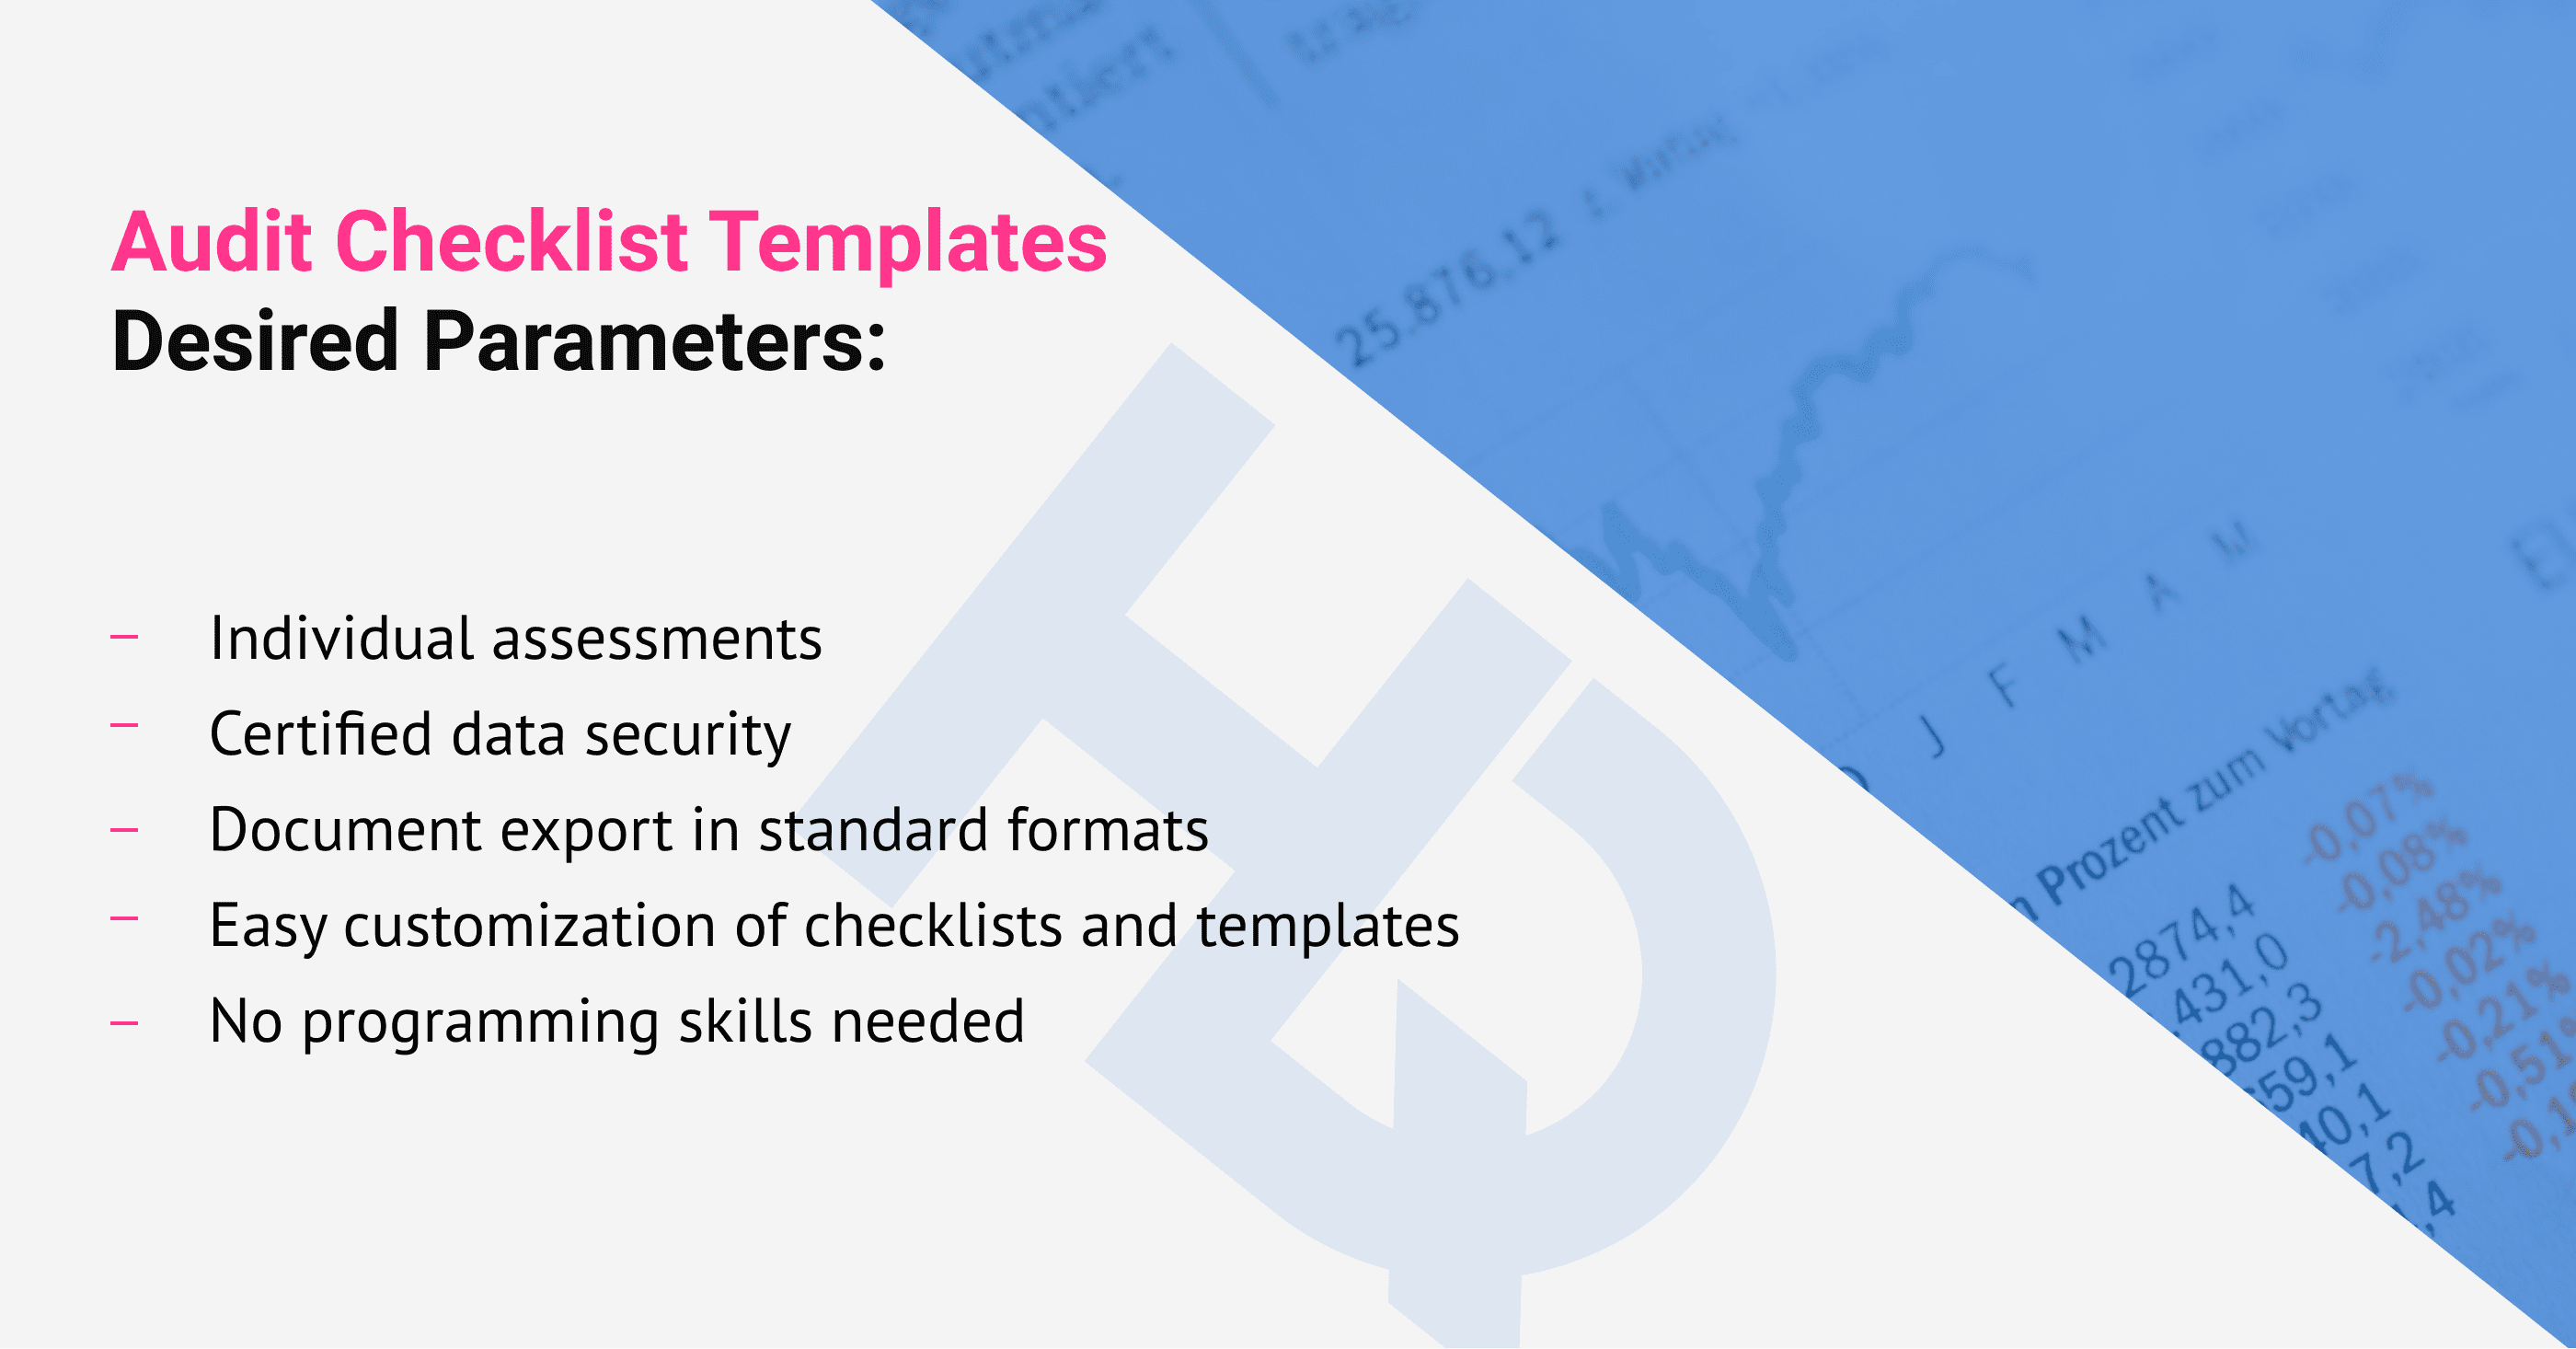 Audit checklist templates features.